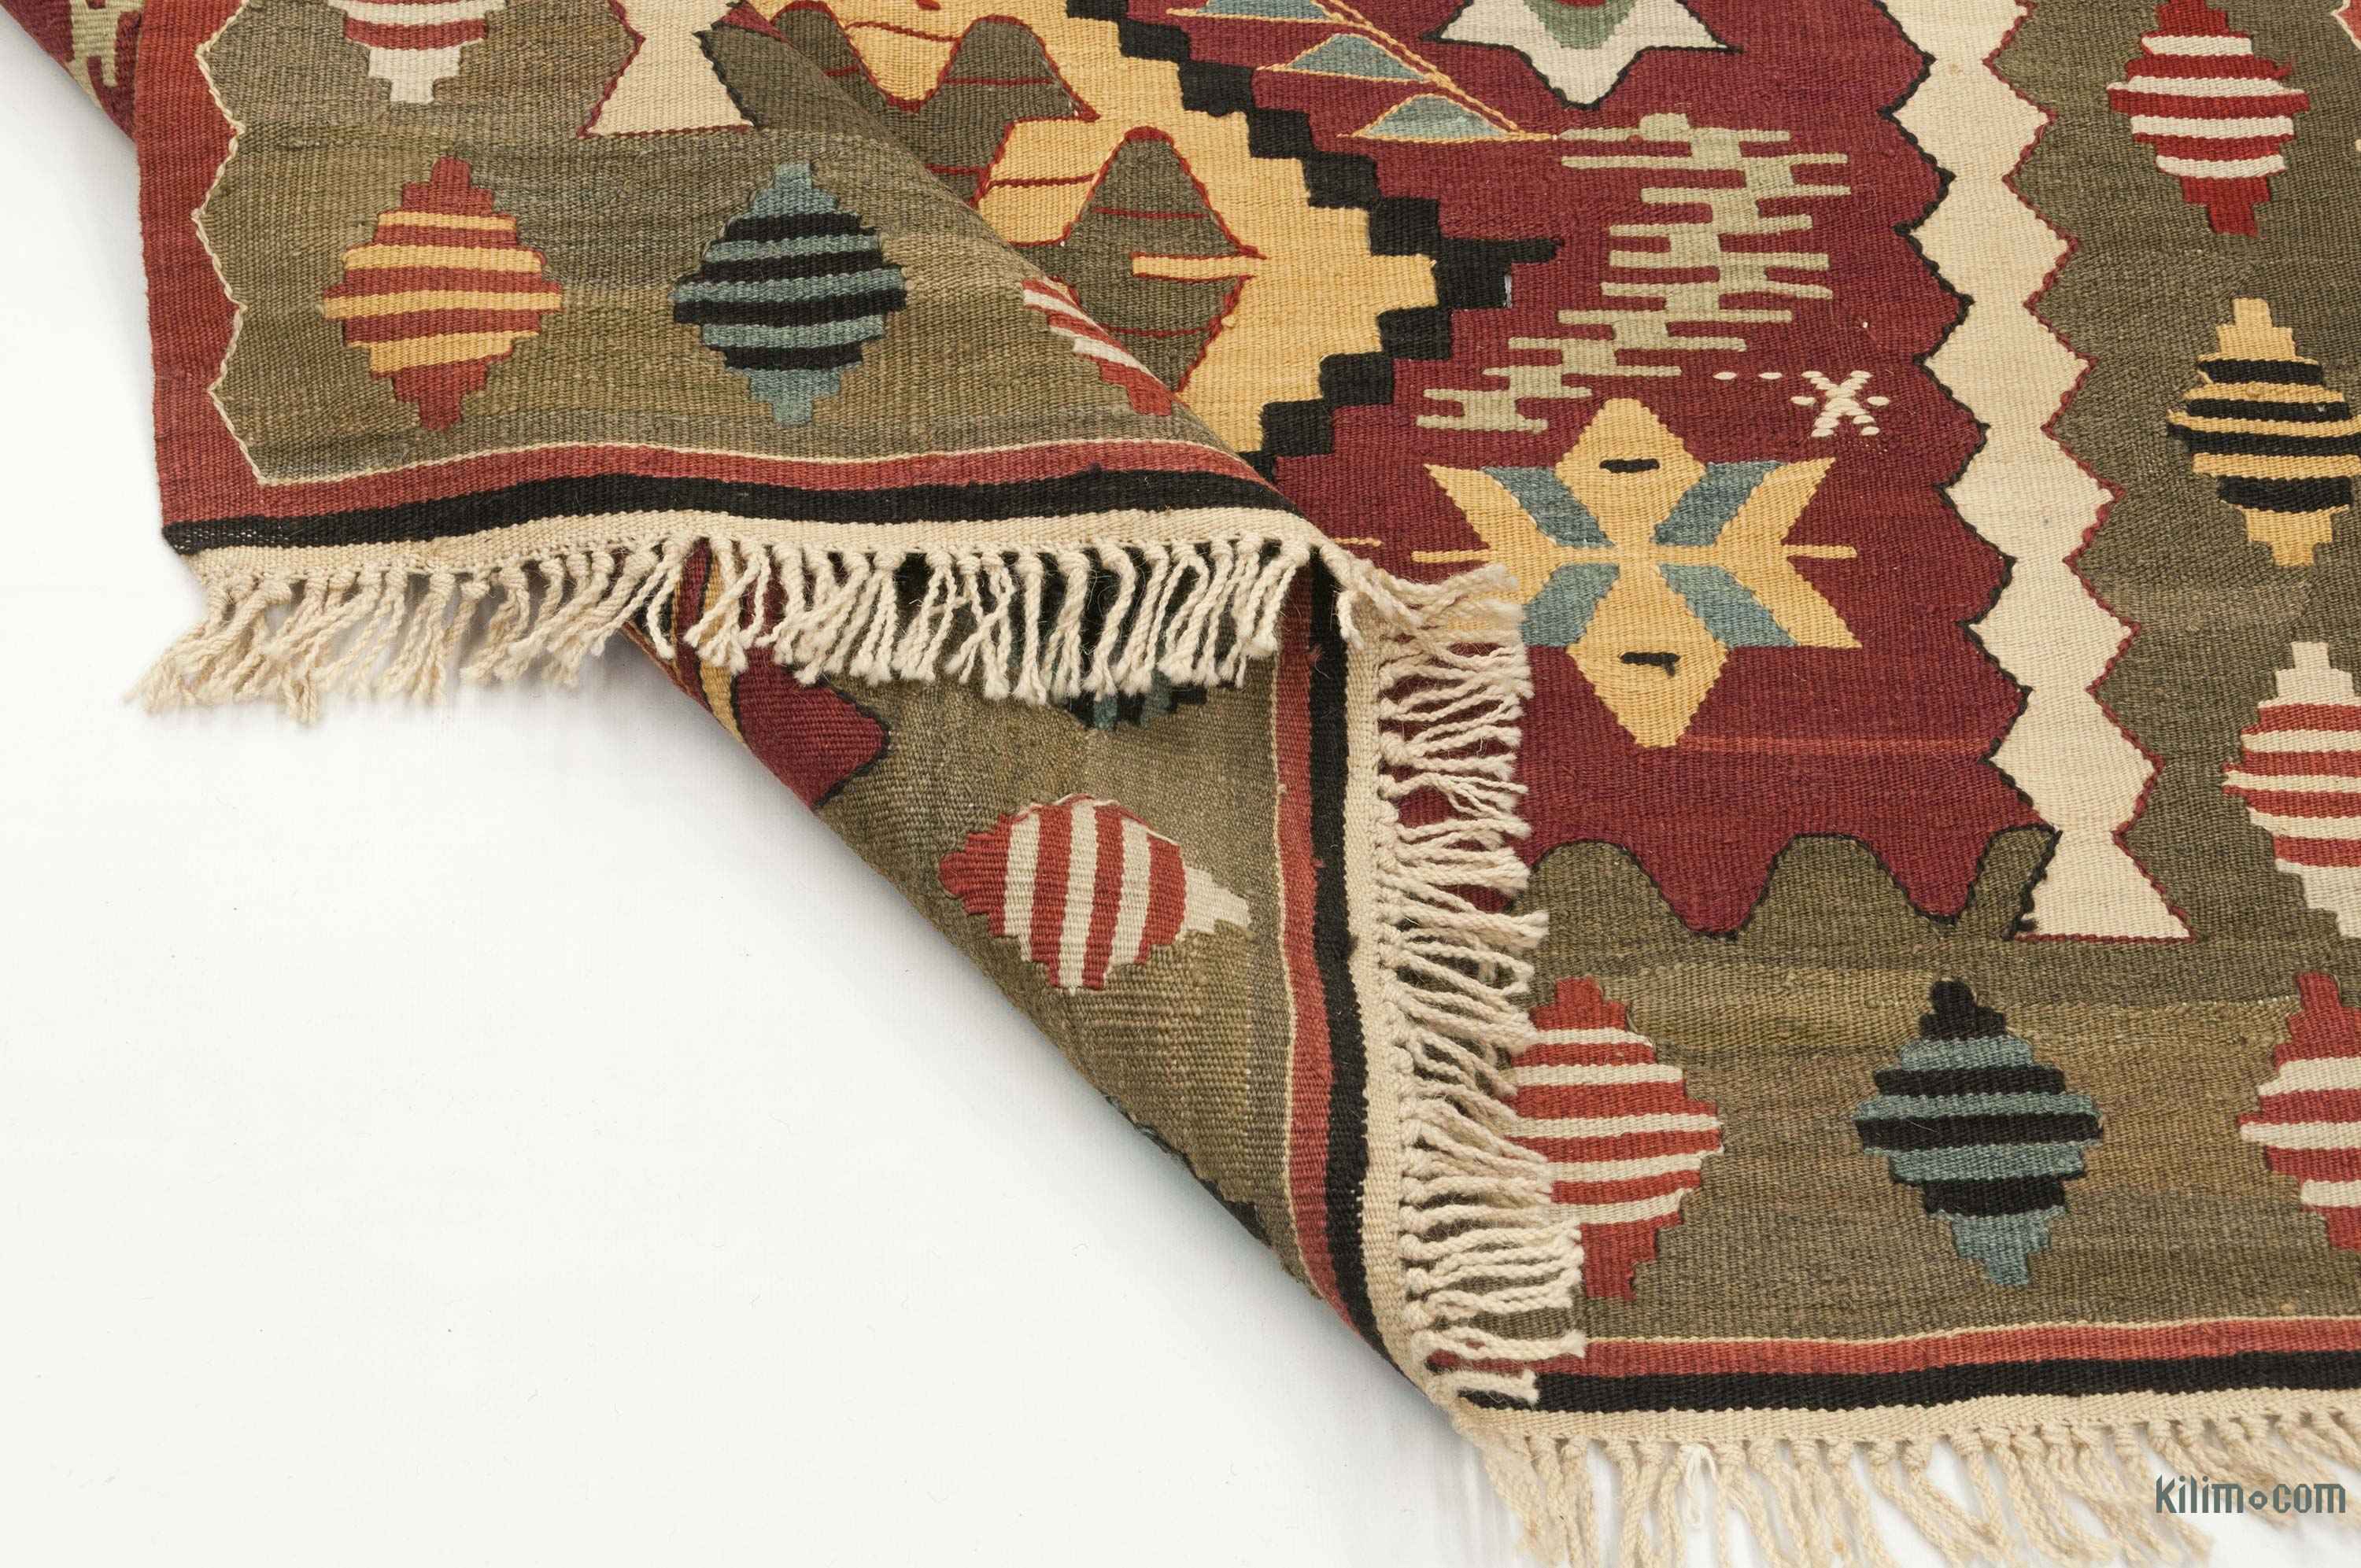  Turkish Kilim rug 5'4x3'2 feet Oriental Area rug Art deco kilim  rug Oriental rug handmade kilim rug : Handmade Products